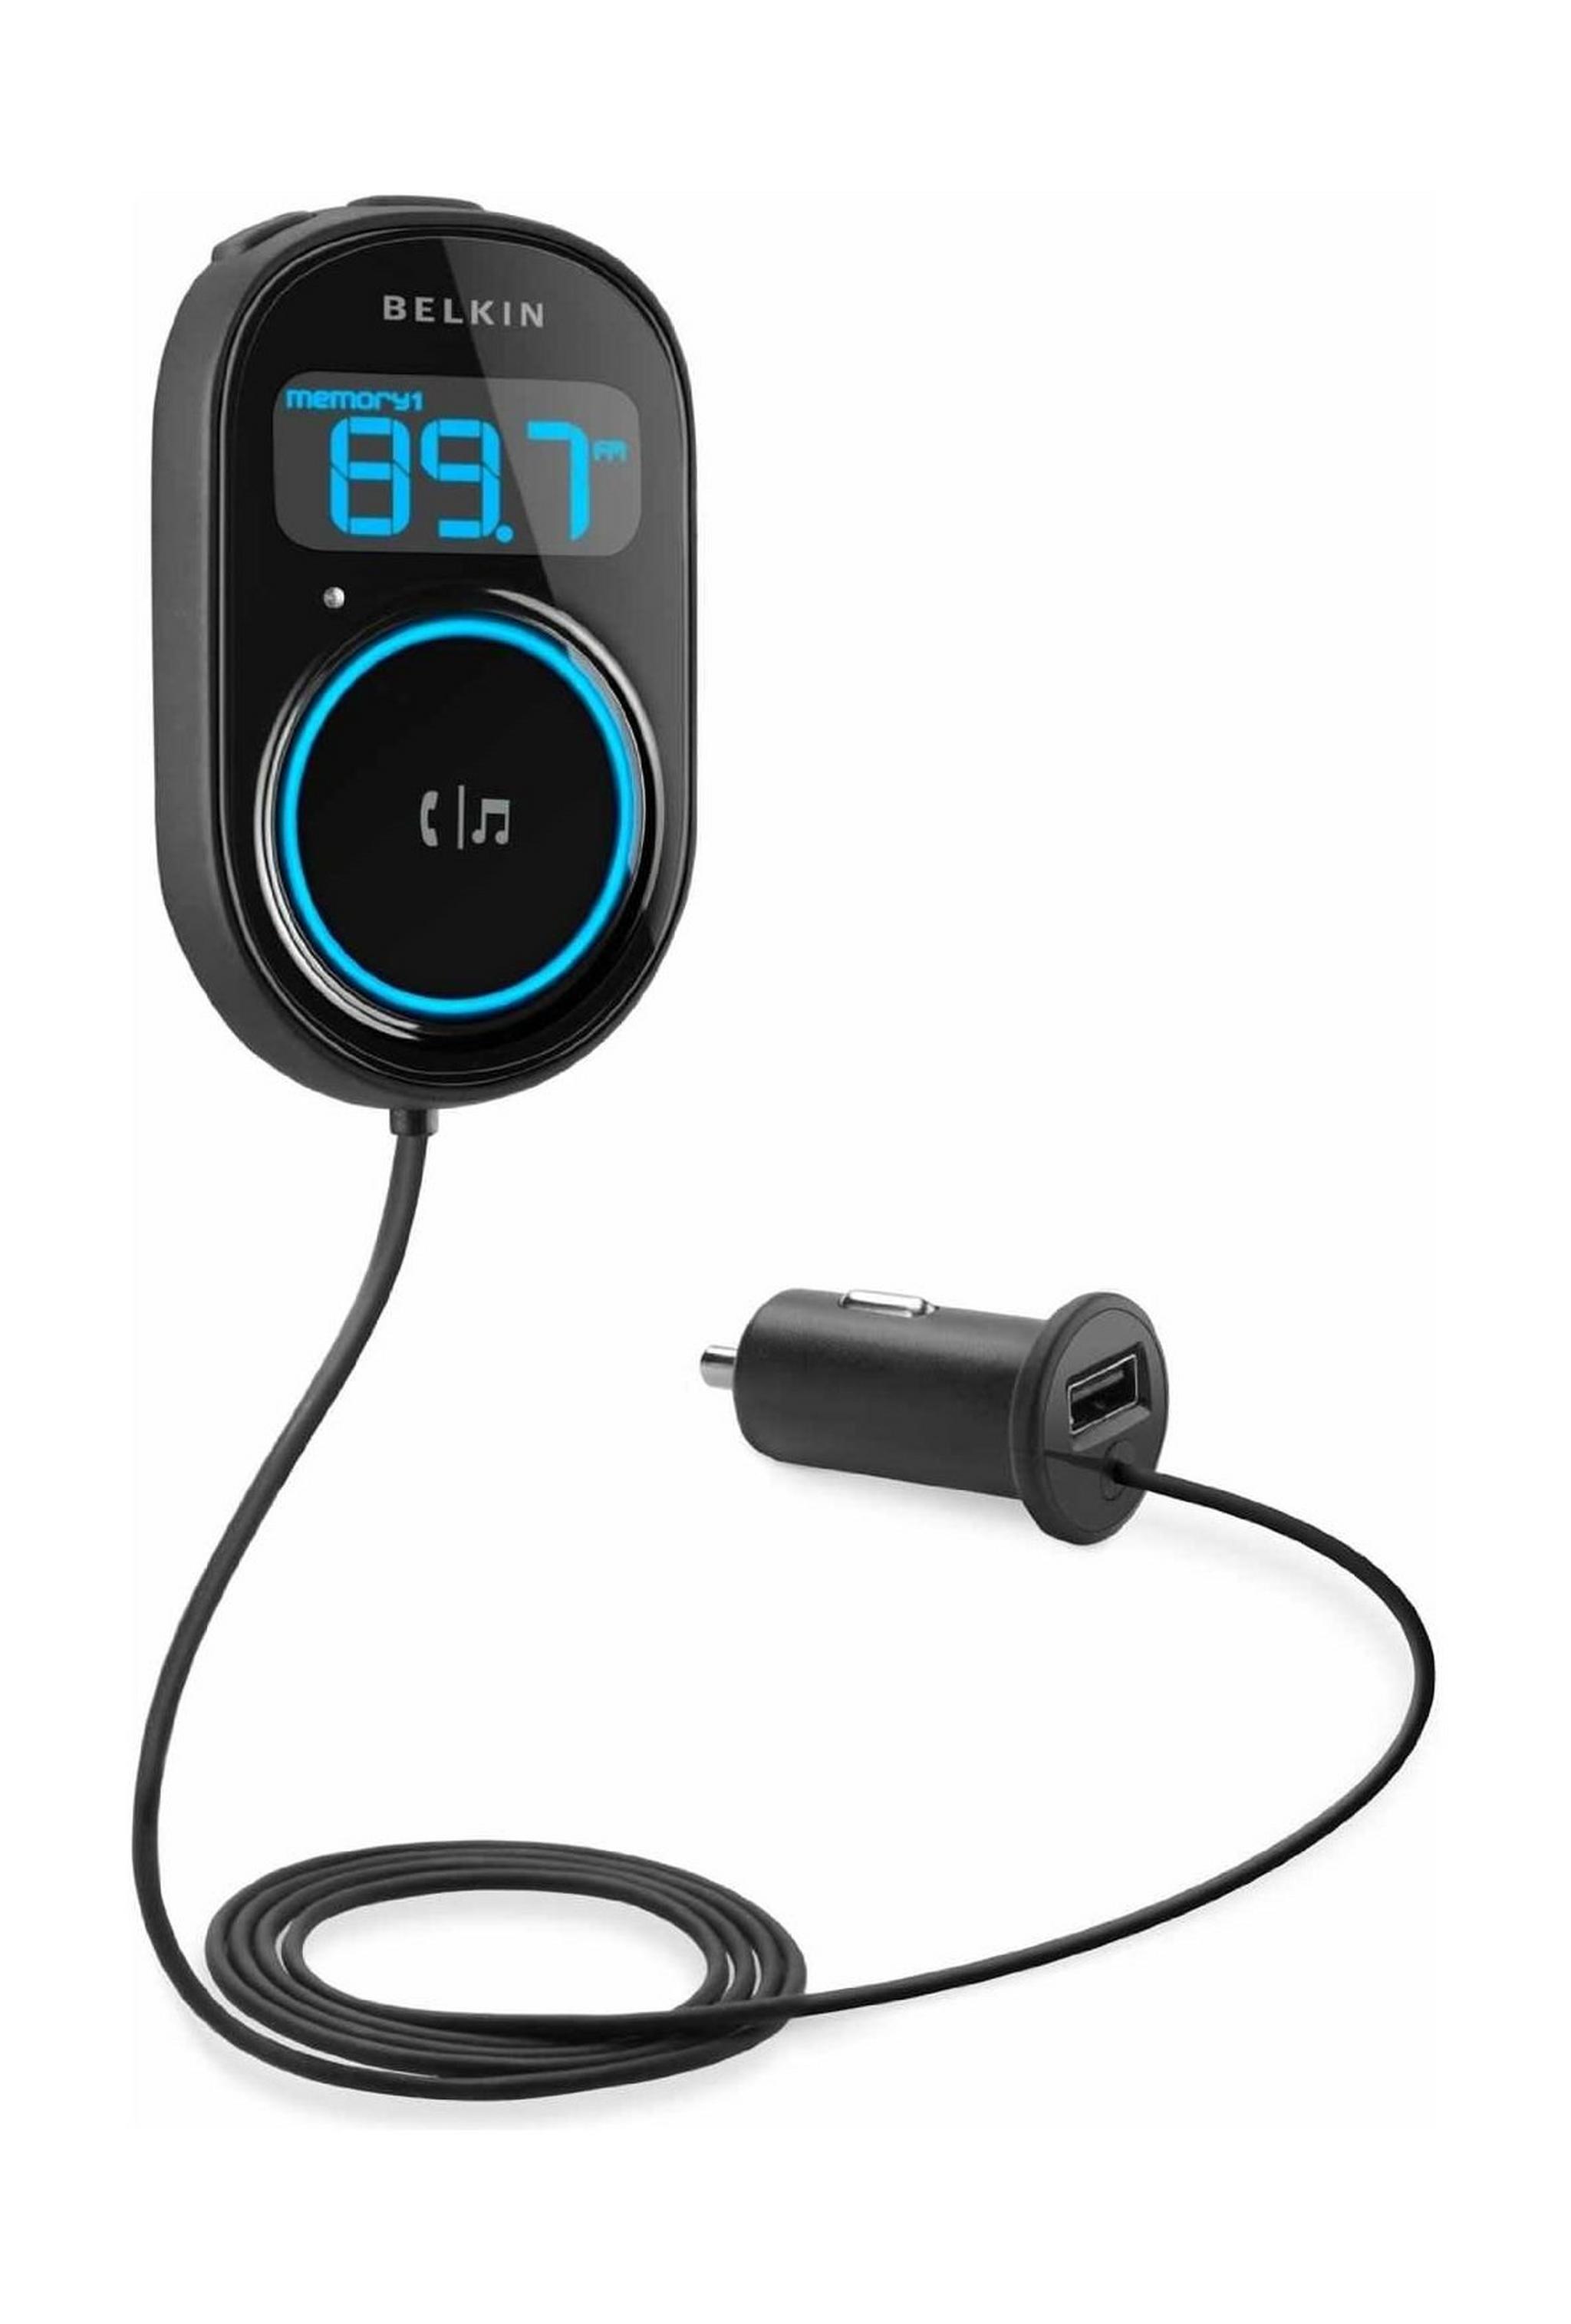 Belkin Bluetooth FM Transmitter F8M117cw - Black